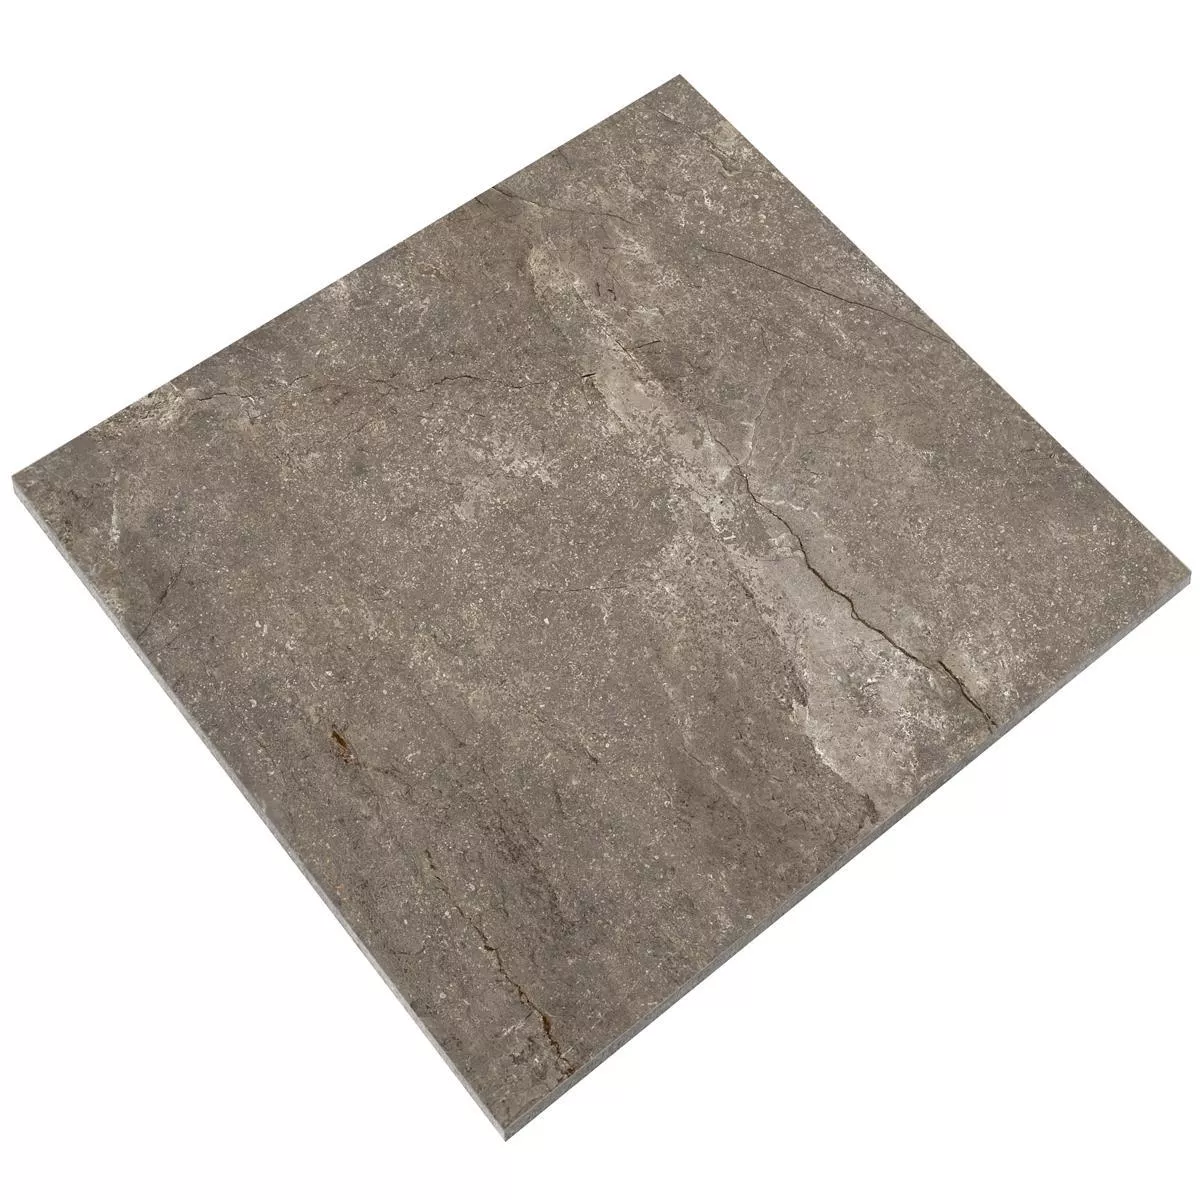 Sample Floor Tiles Pangea Marble Optic Mat Mokka 120x120cm